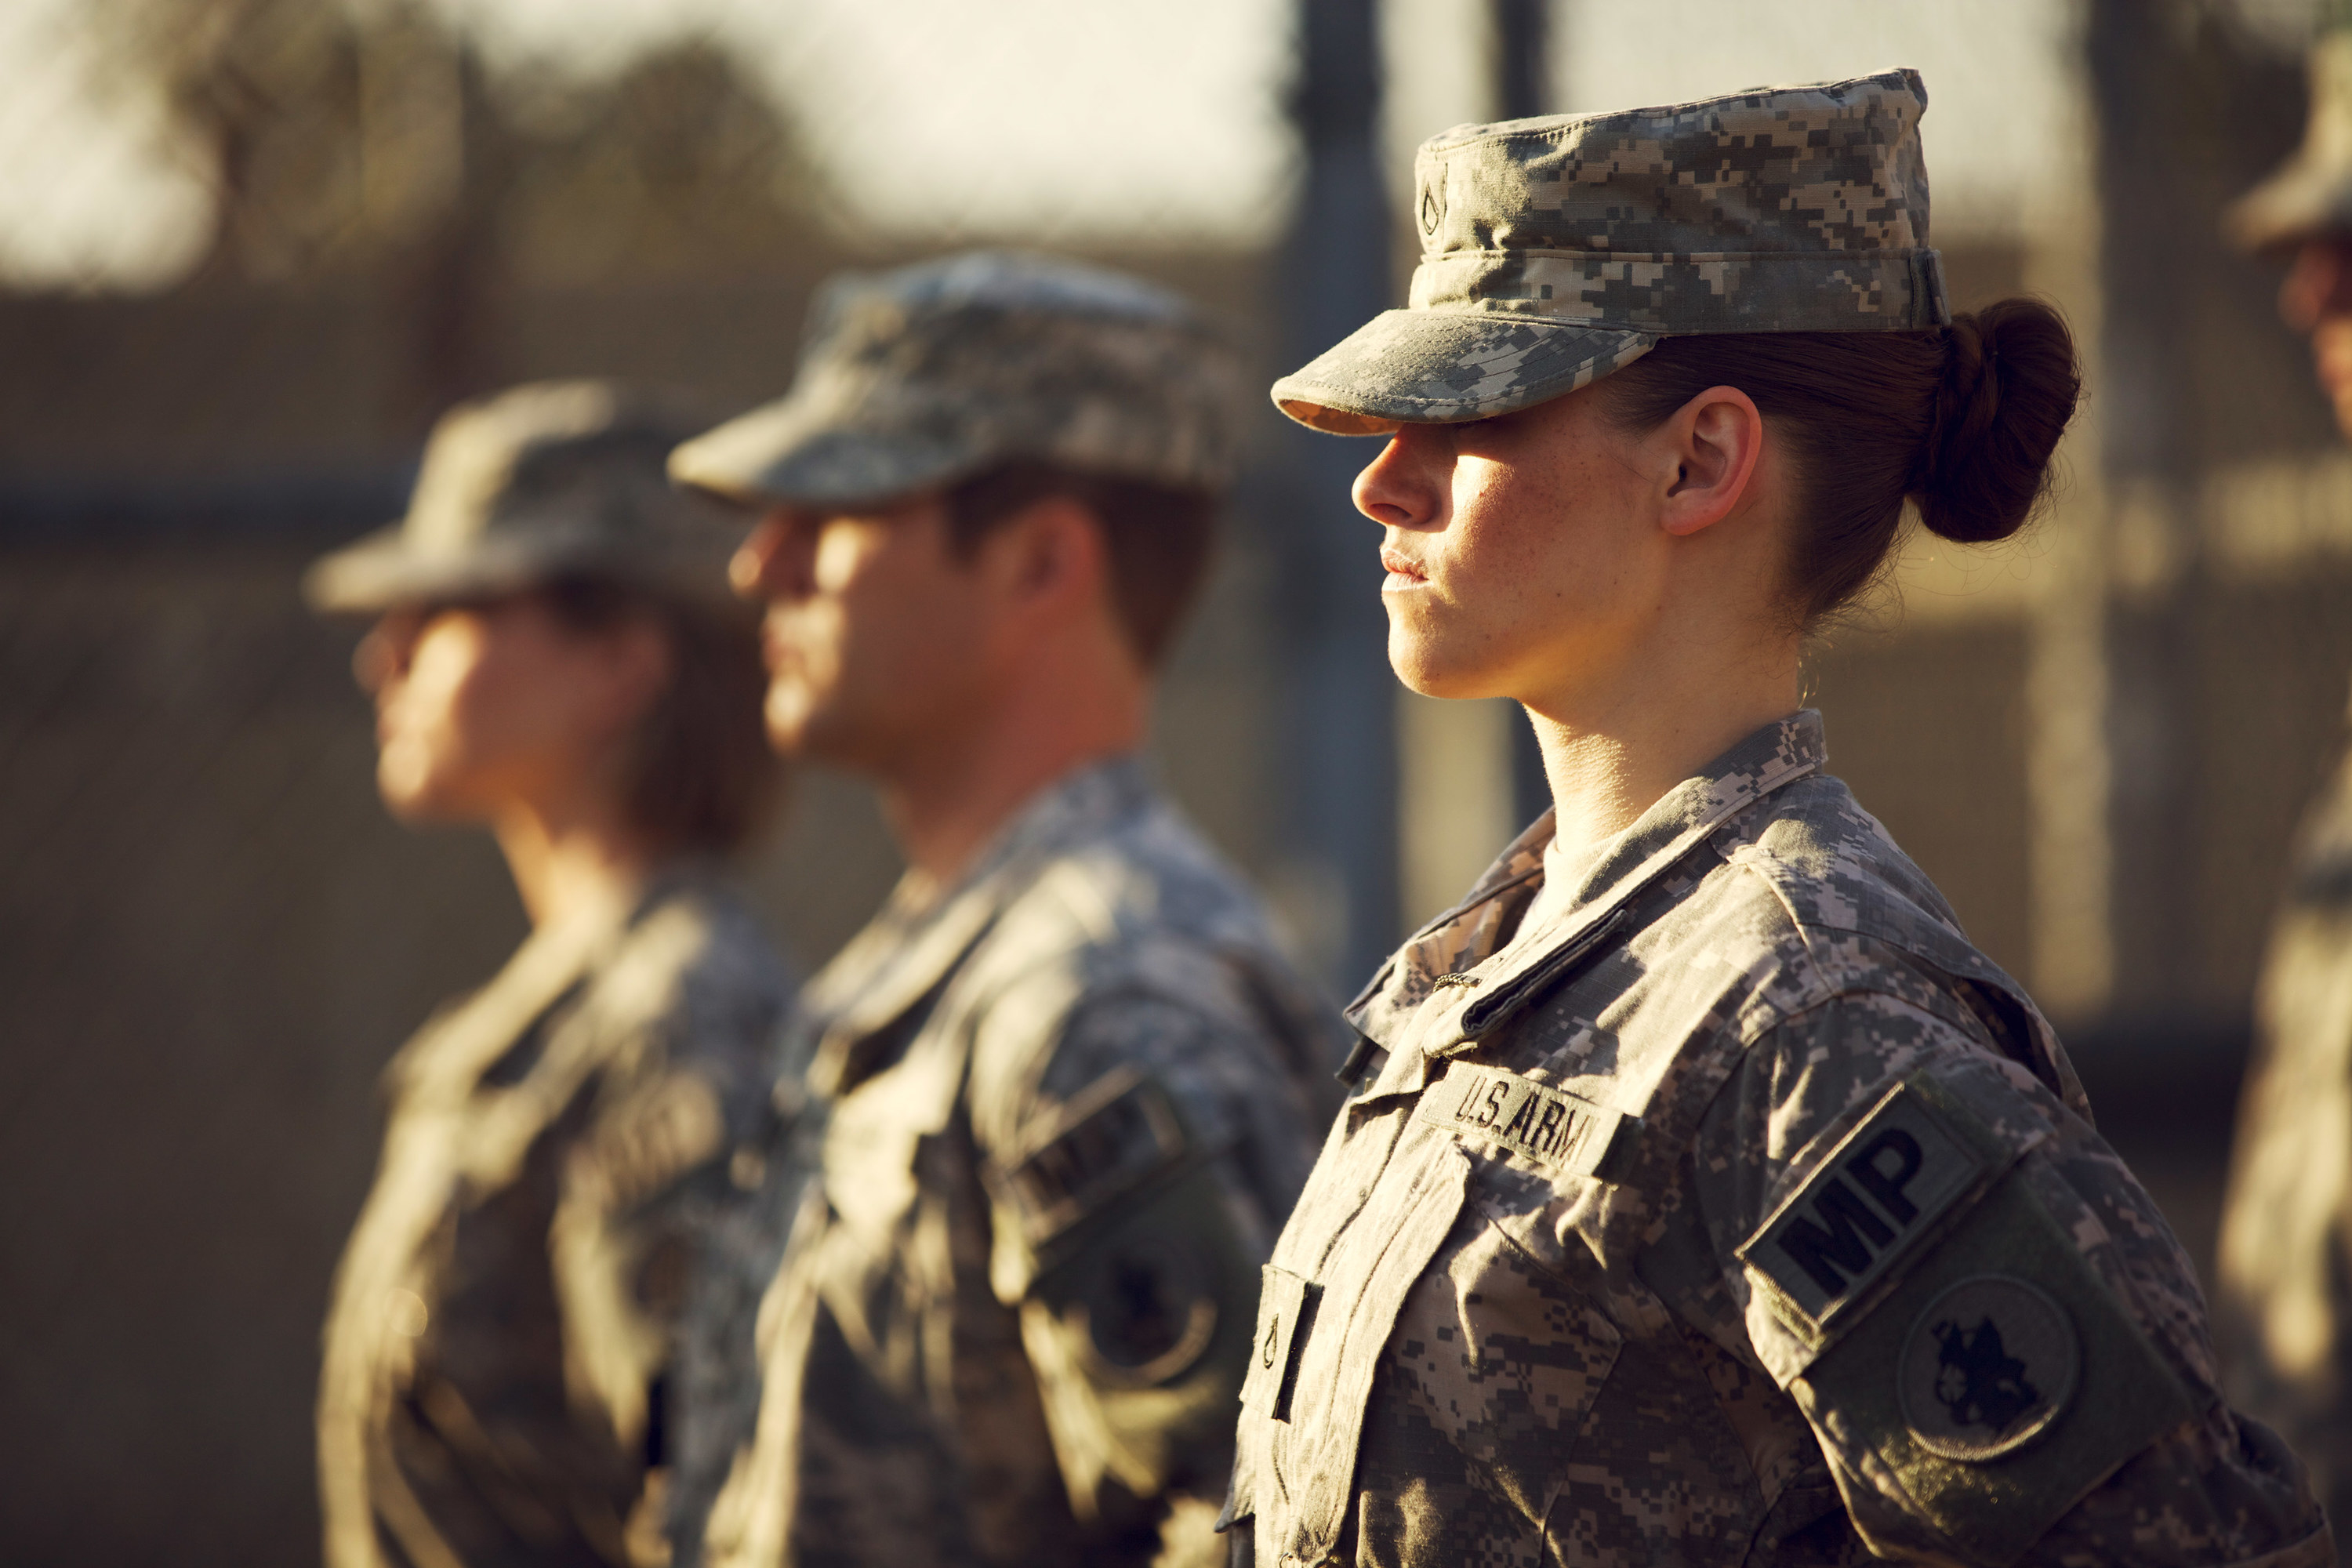 Kristen Stewart stands at alert in military fatigues